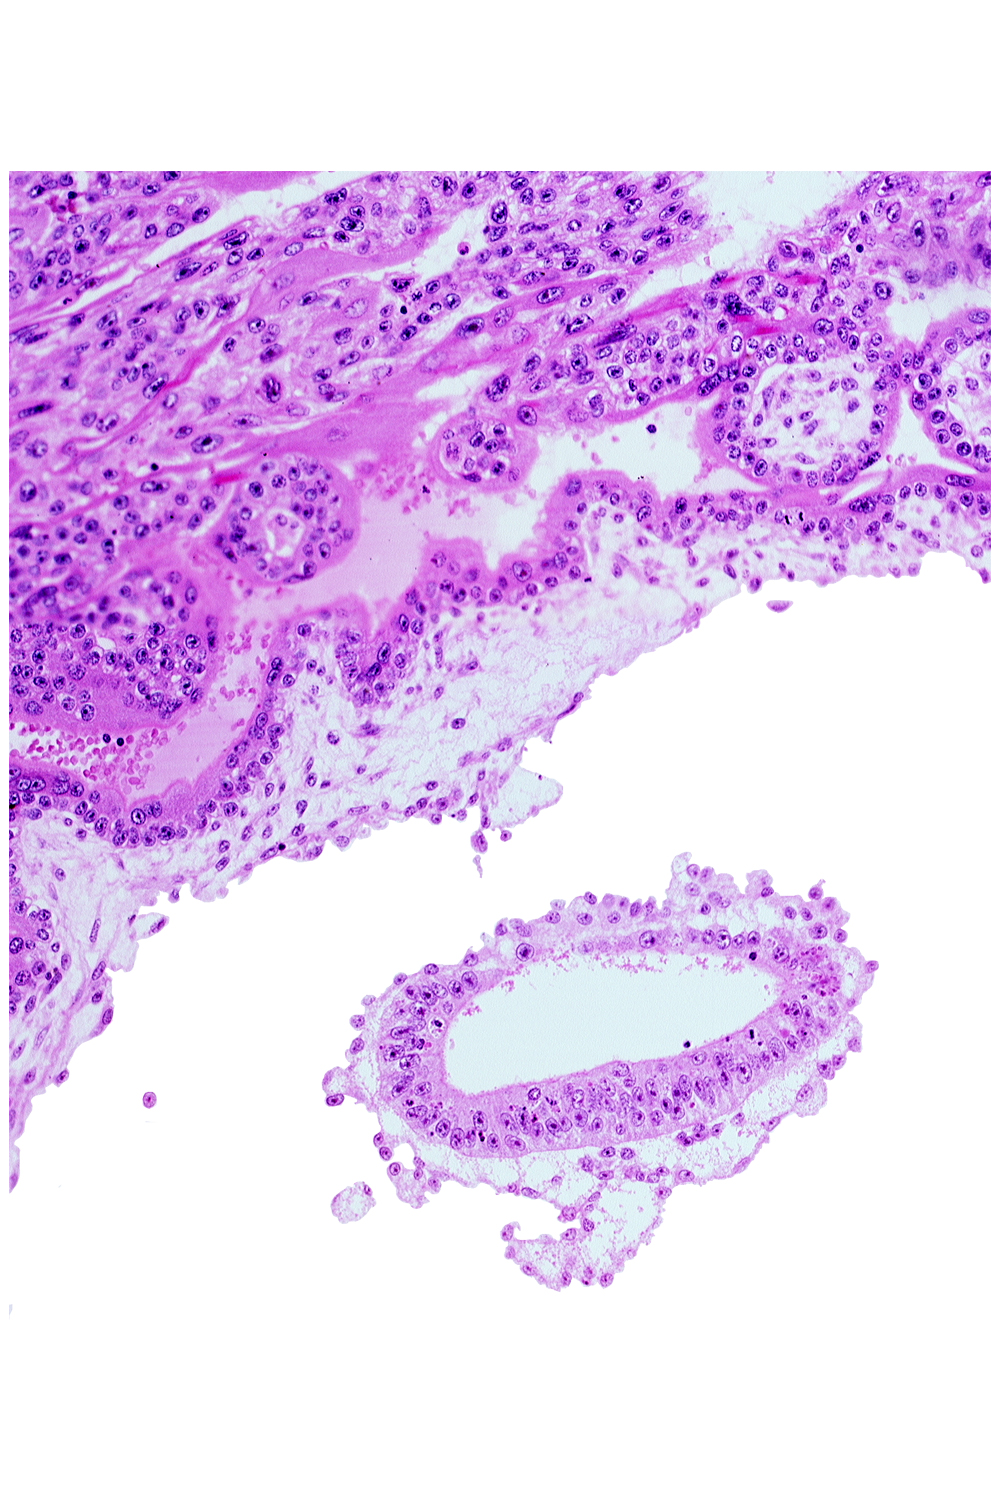 amniotic cavity, cephalic edge of amnion, epiblast, mesoblast